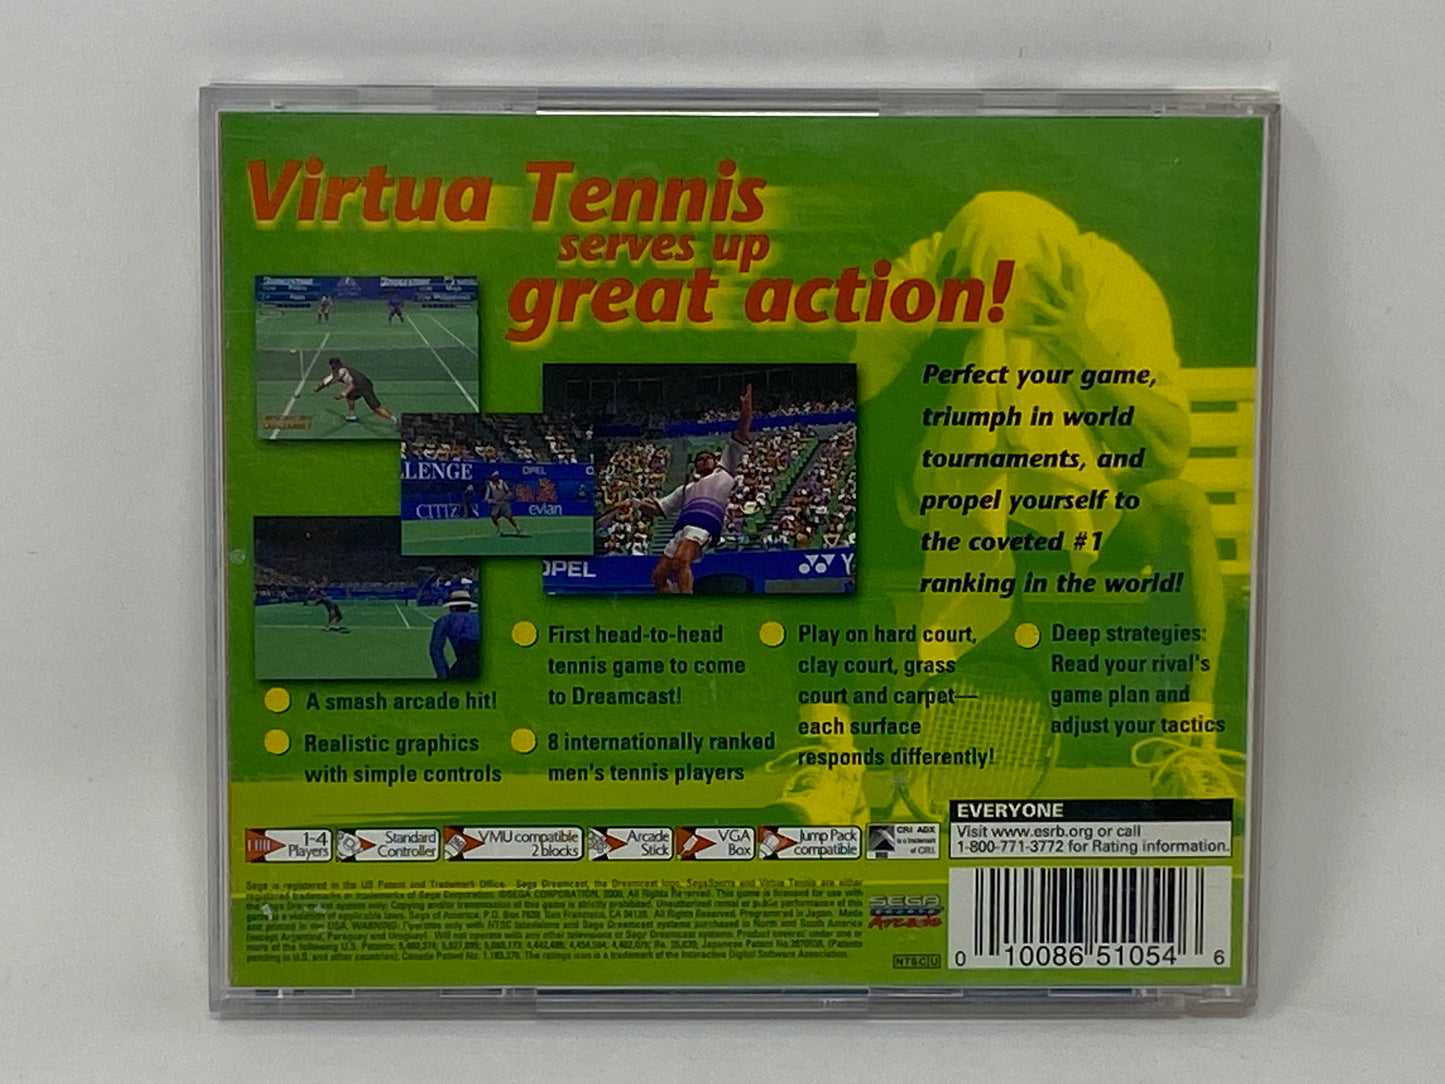 Sega Dreamcast - Virtua Tennis (Sega All-Stars)